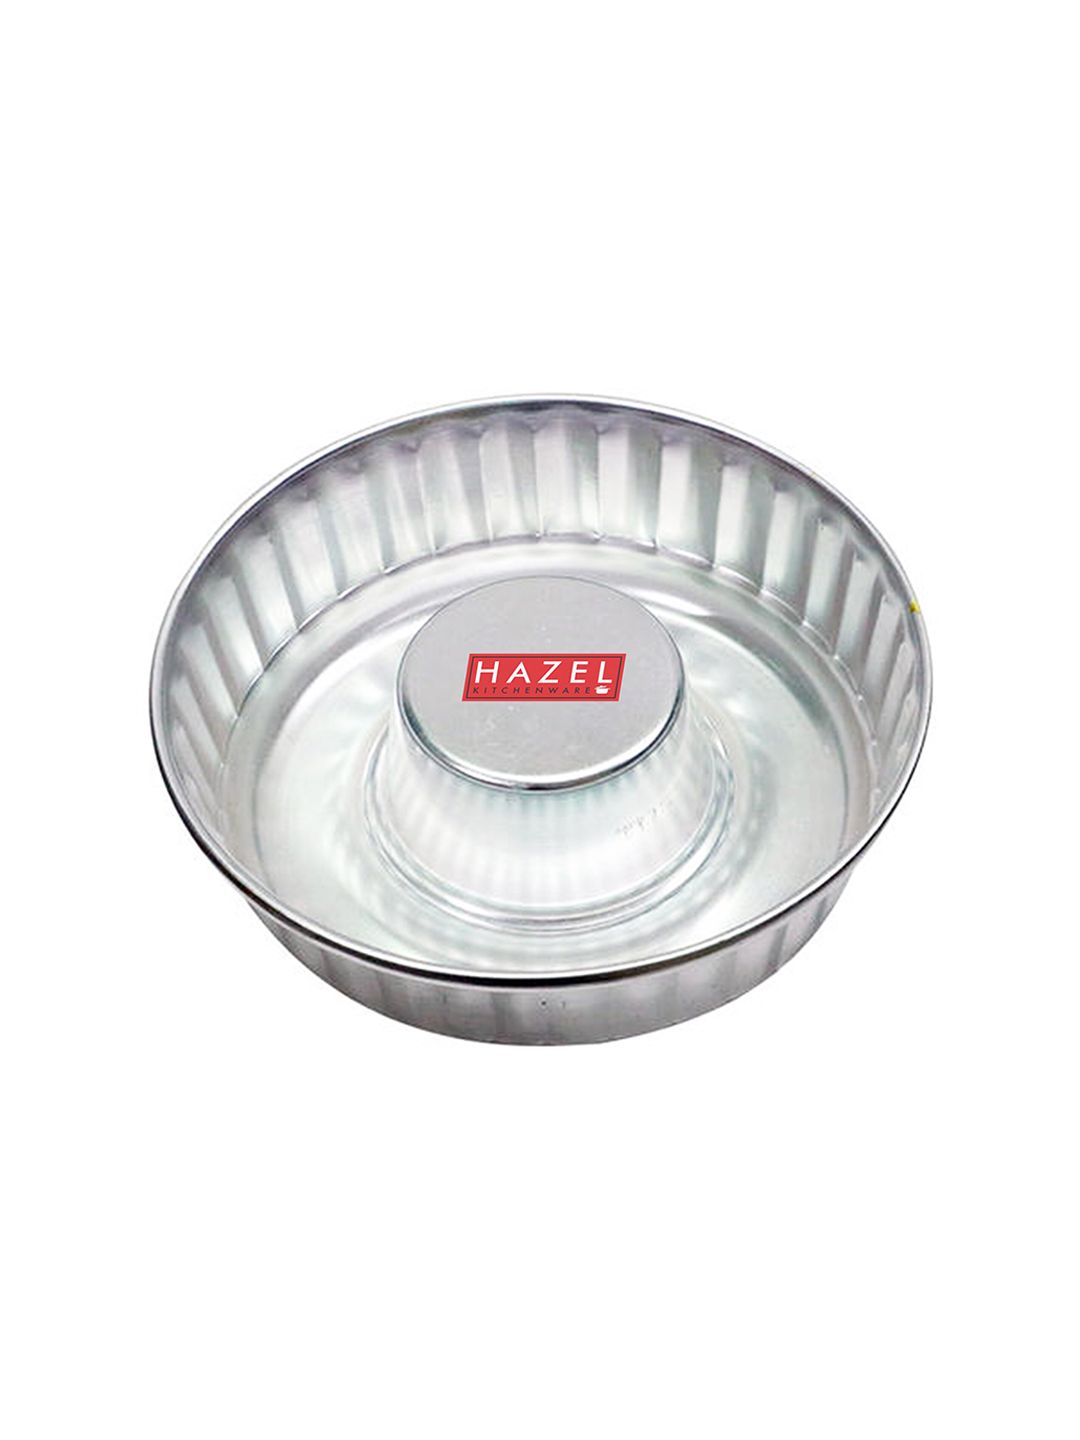 HAZEL Silver-Toned Donut Aluminium Mould Price in India